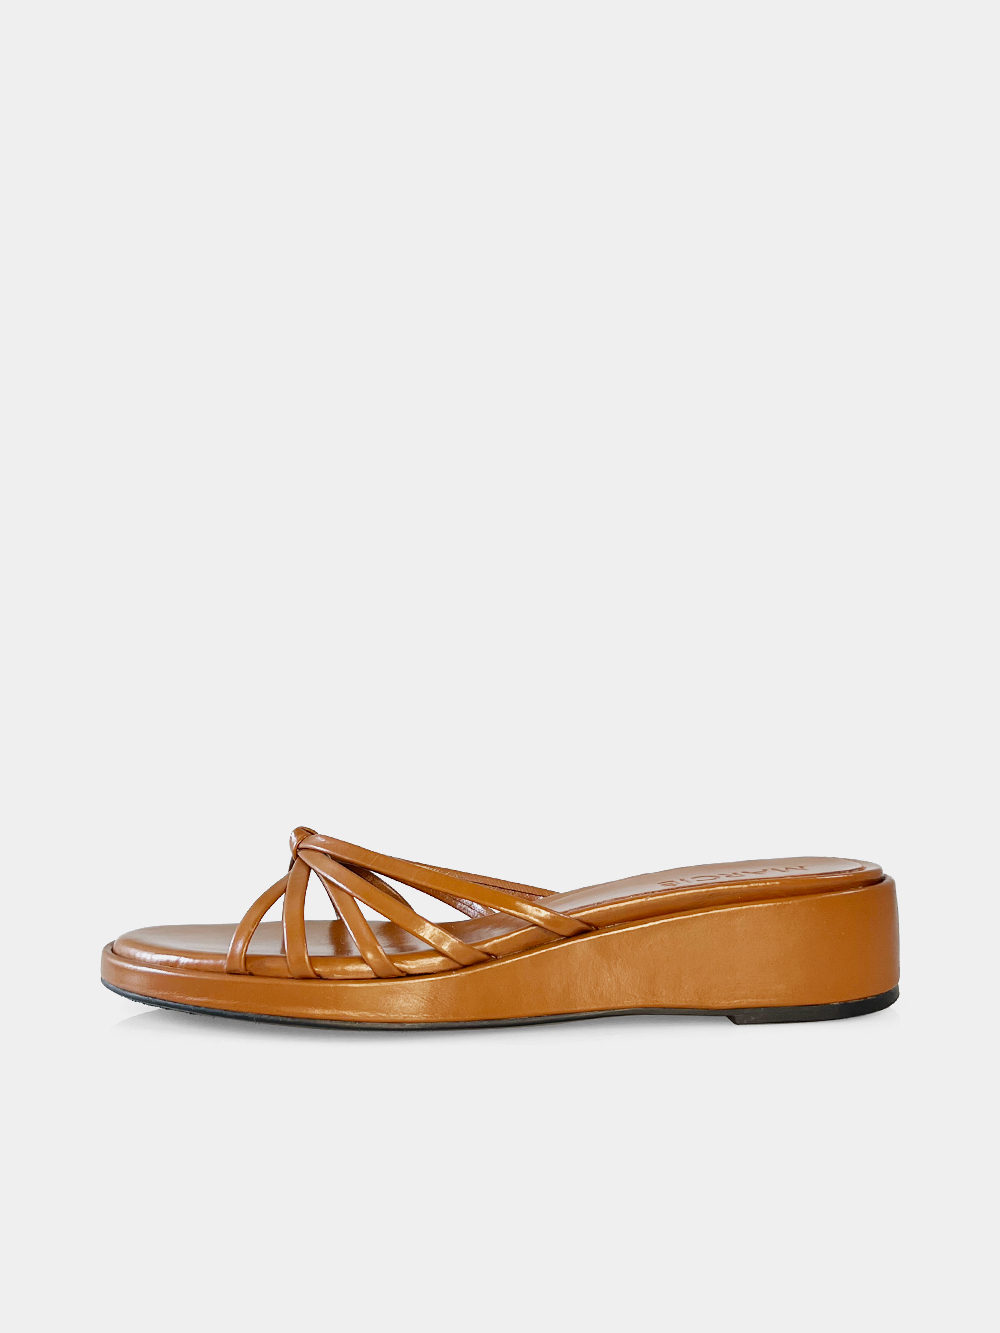 [Out of stock] Mrc105 Strap Platform Sandal (Light Brown)